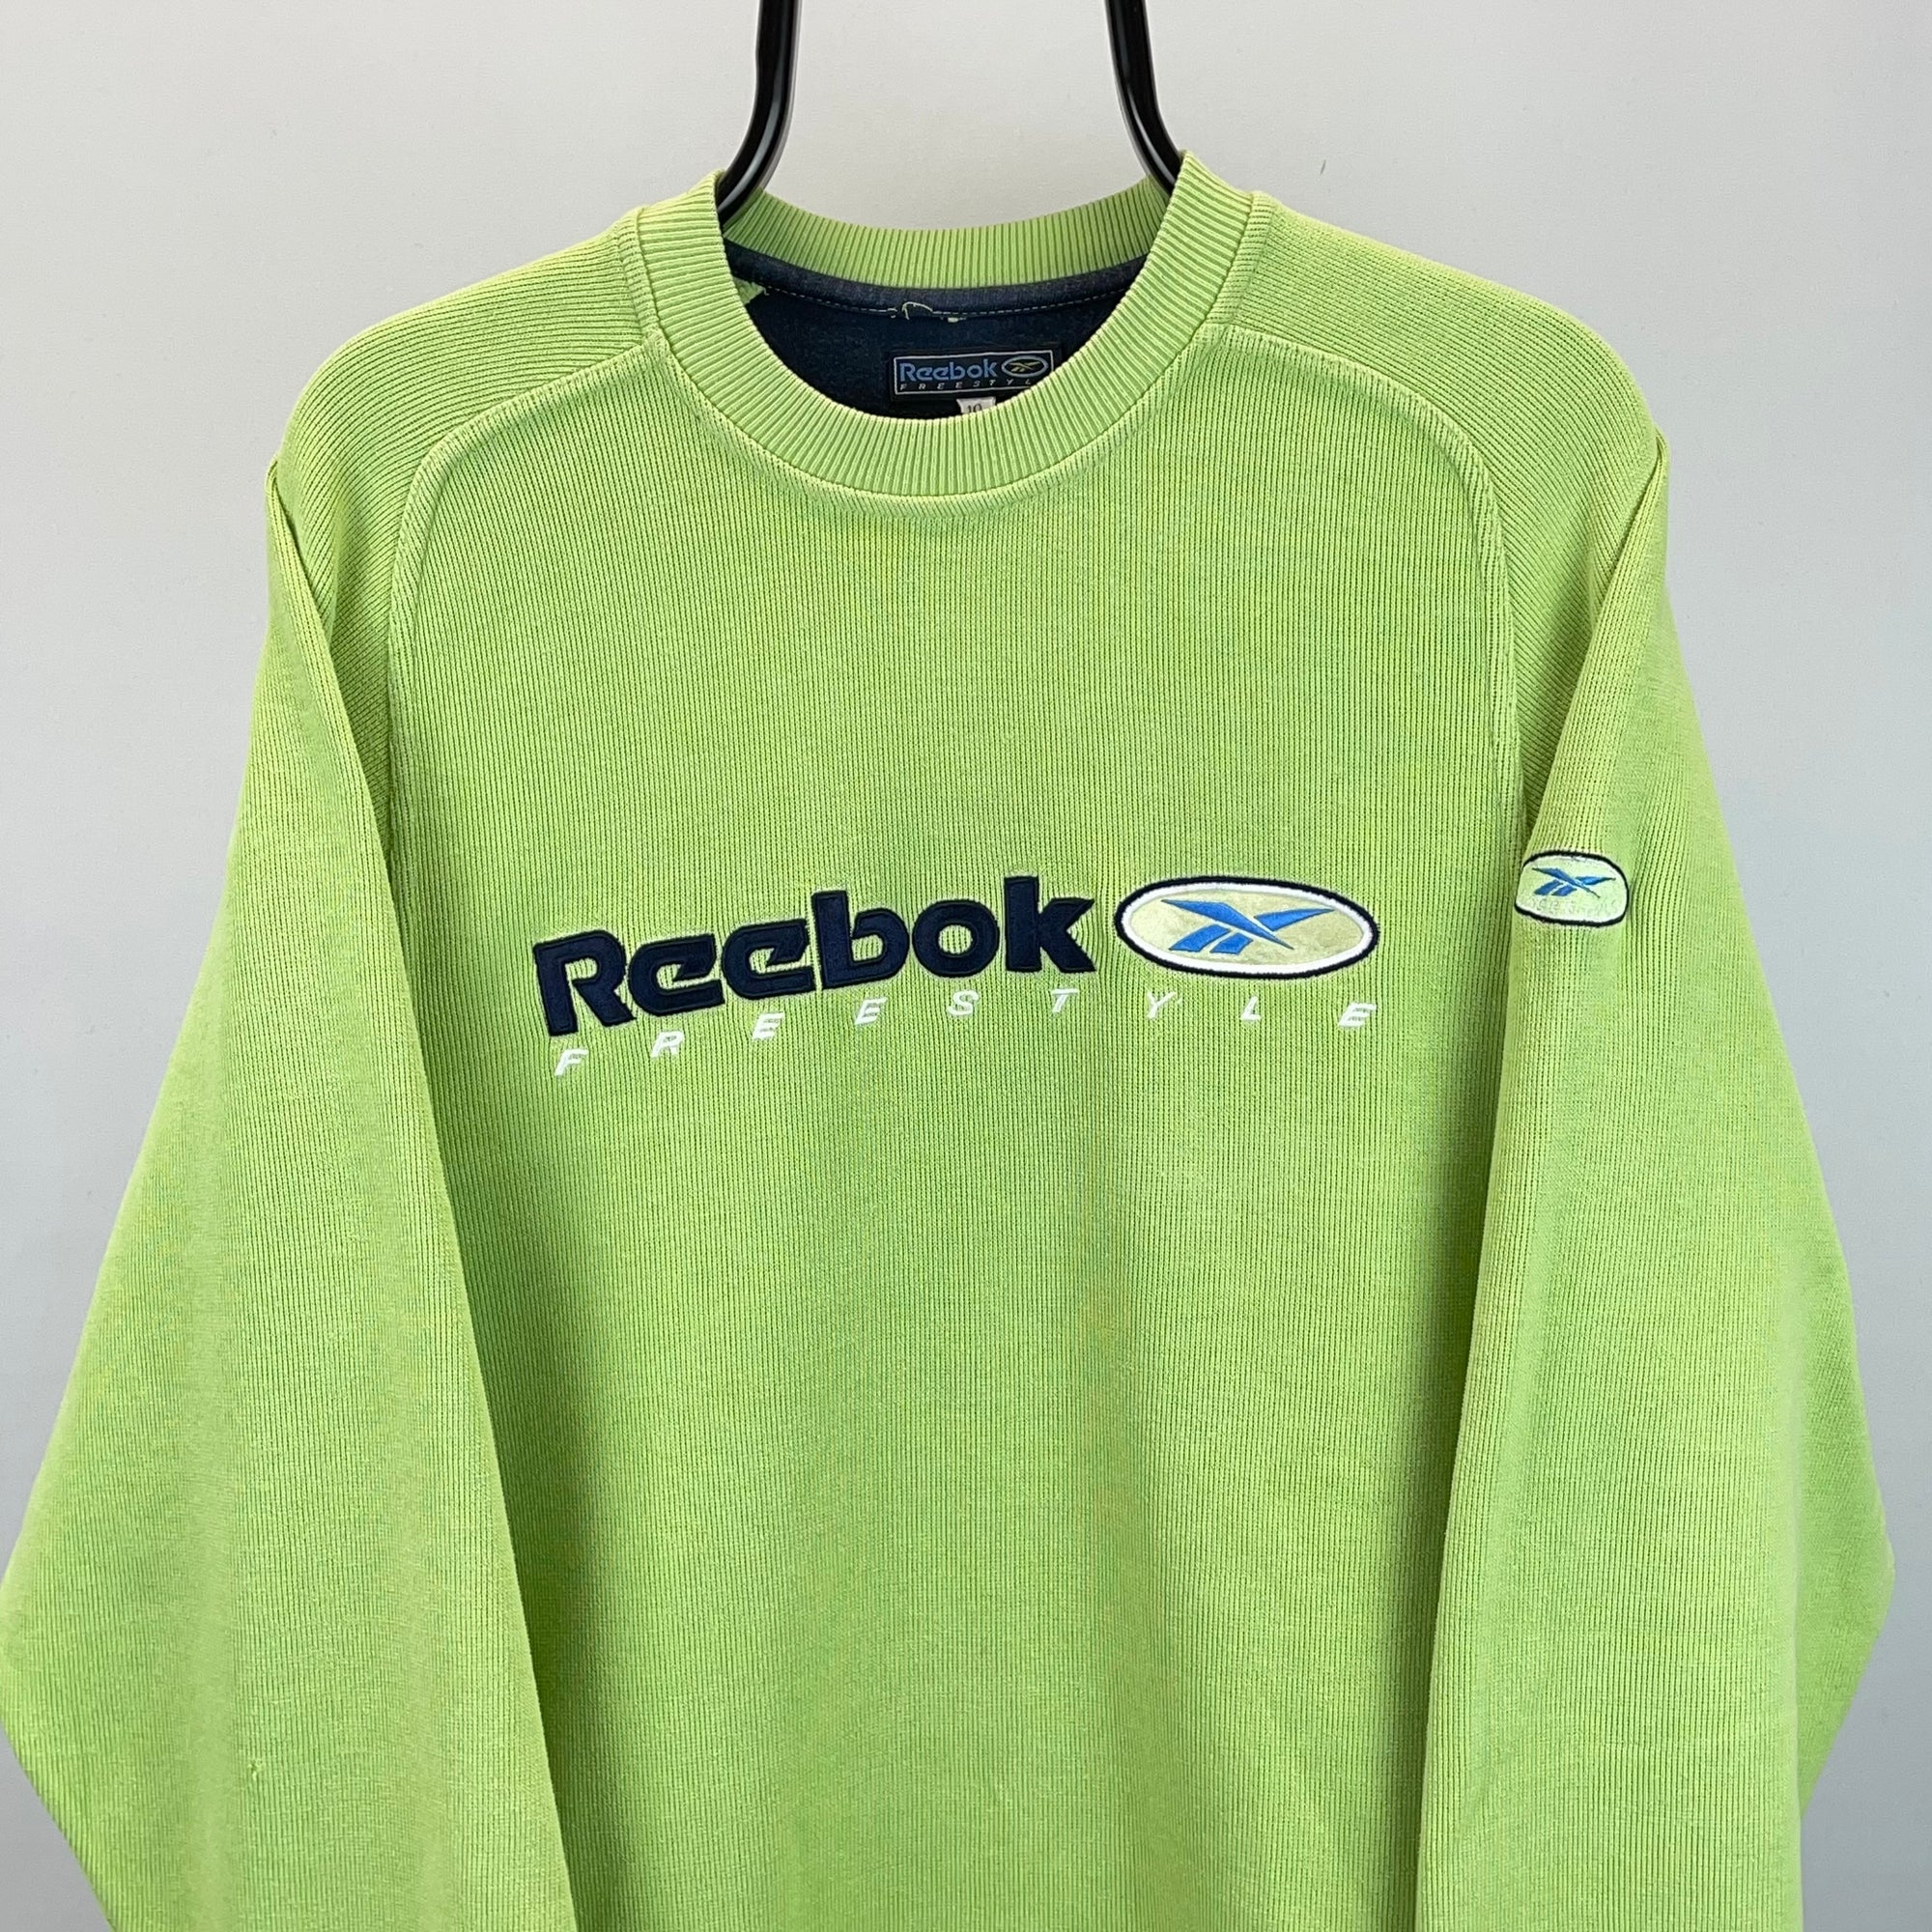 Vintage 90s Reebok Spellout Sweatshirt in Lime Green - Men's Small/Women's Medium